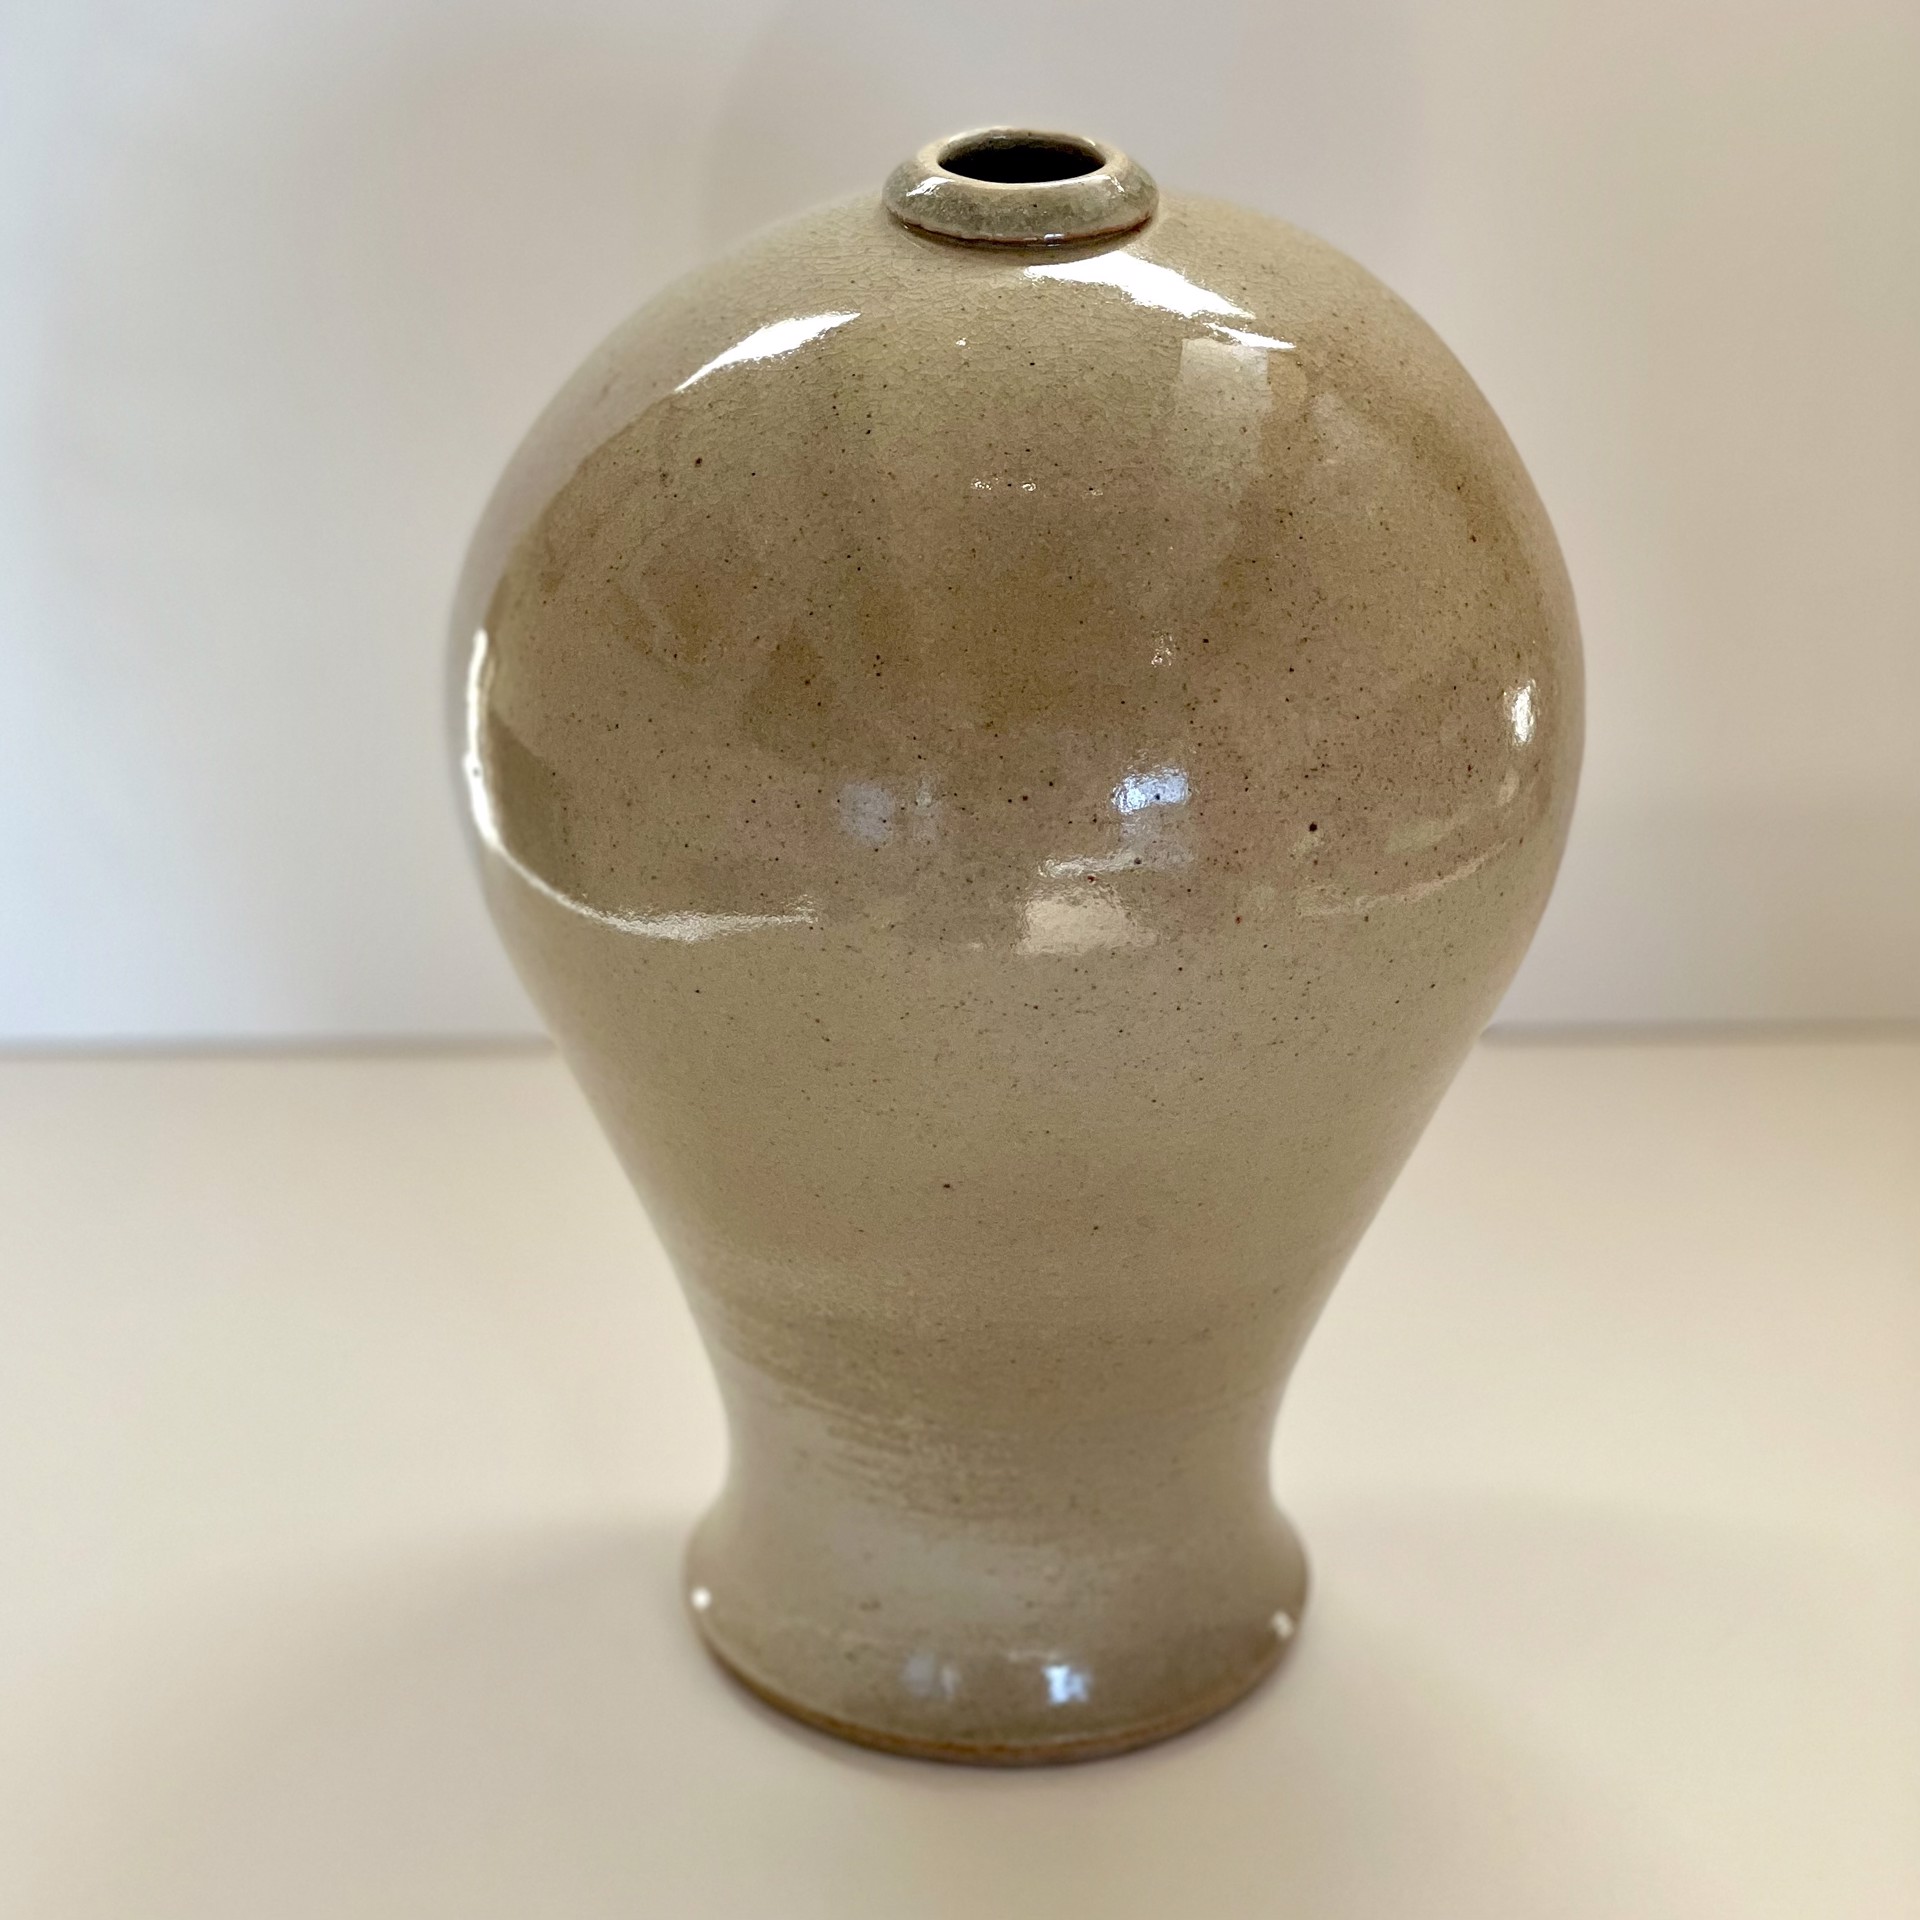 Vase 4 by David LaLomia